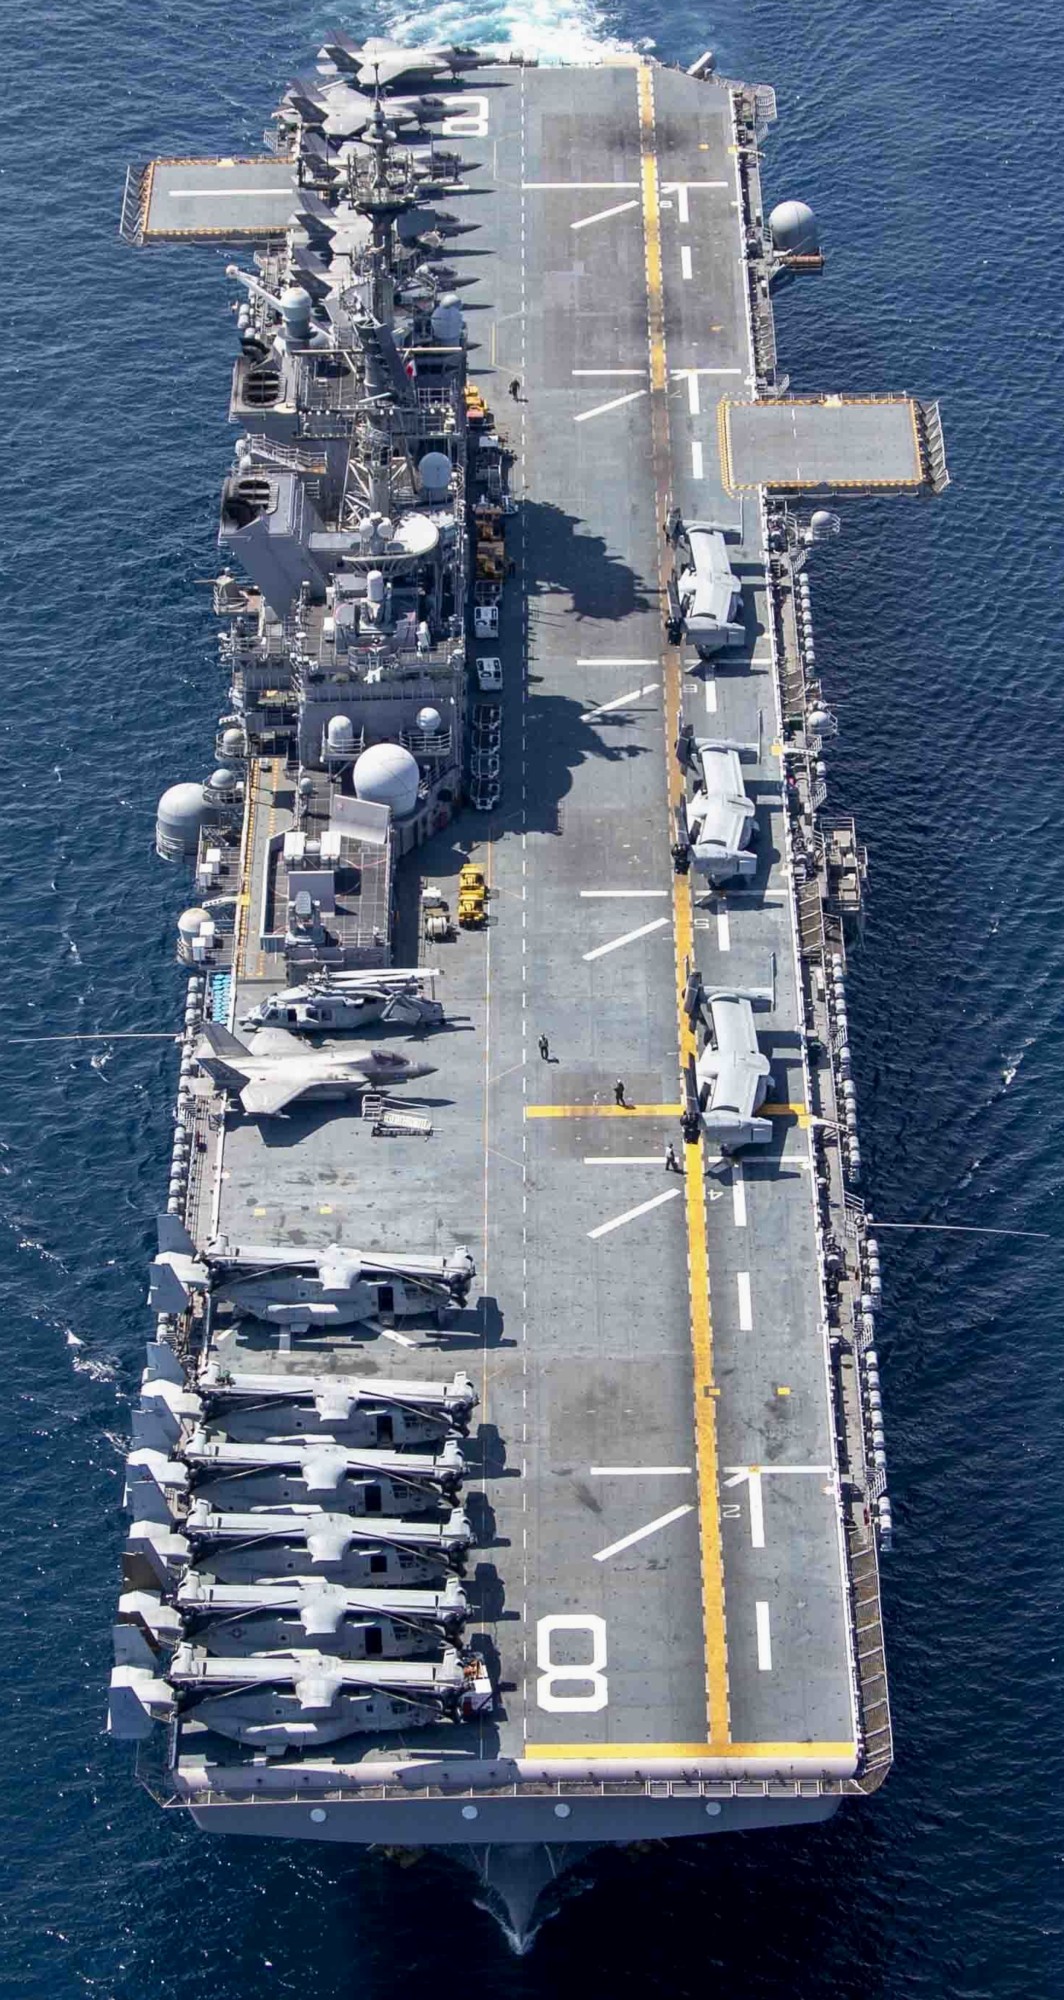 lhd-8 uss makin island amphibious assault ship landing helicopter dock us navy vmm-362 marines java sea carat 172